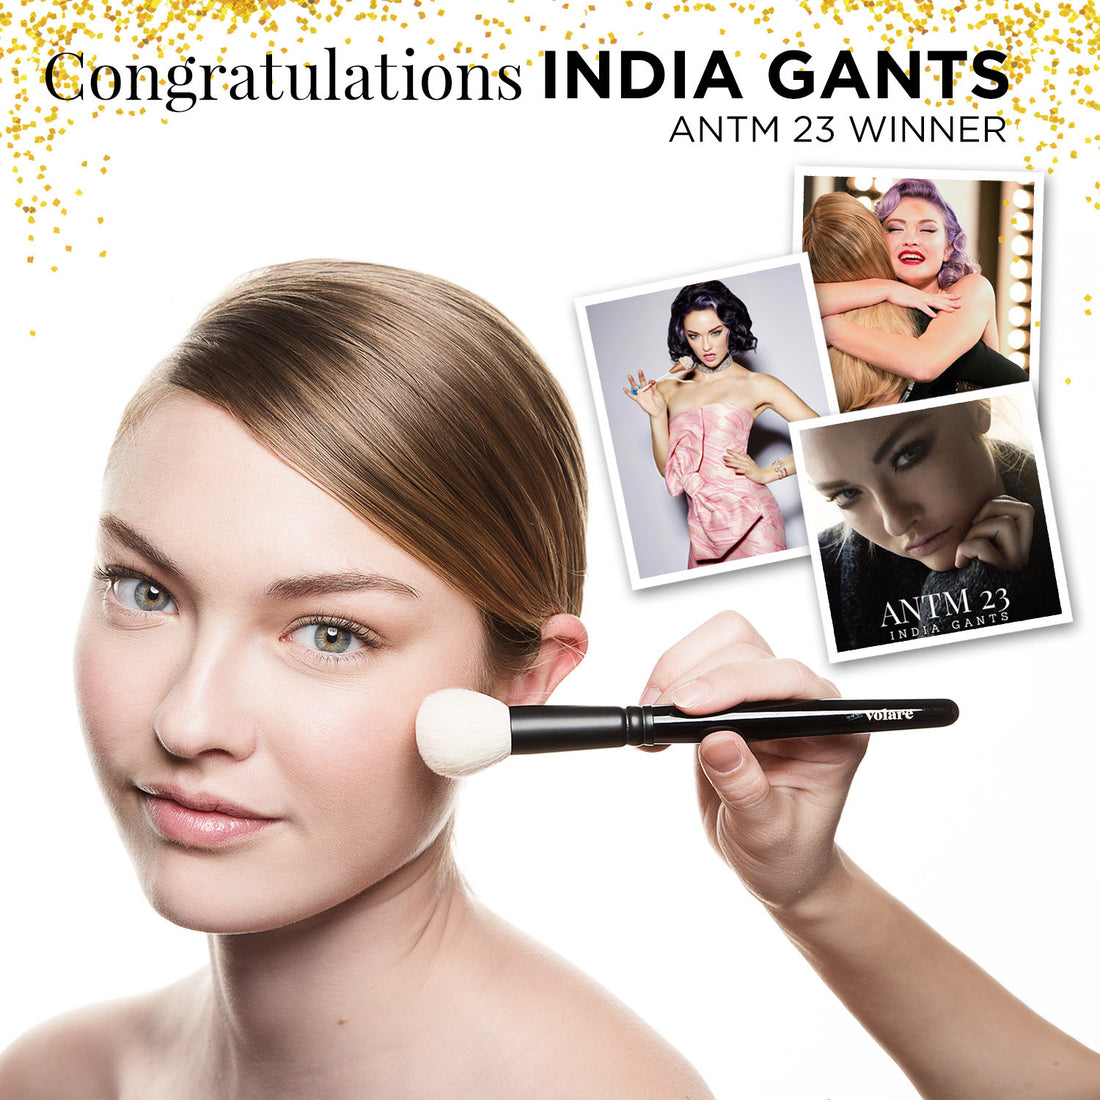 Congratulations ANTM 23 Winner, India Gants